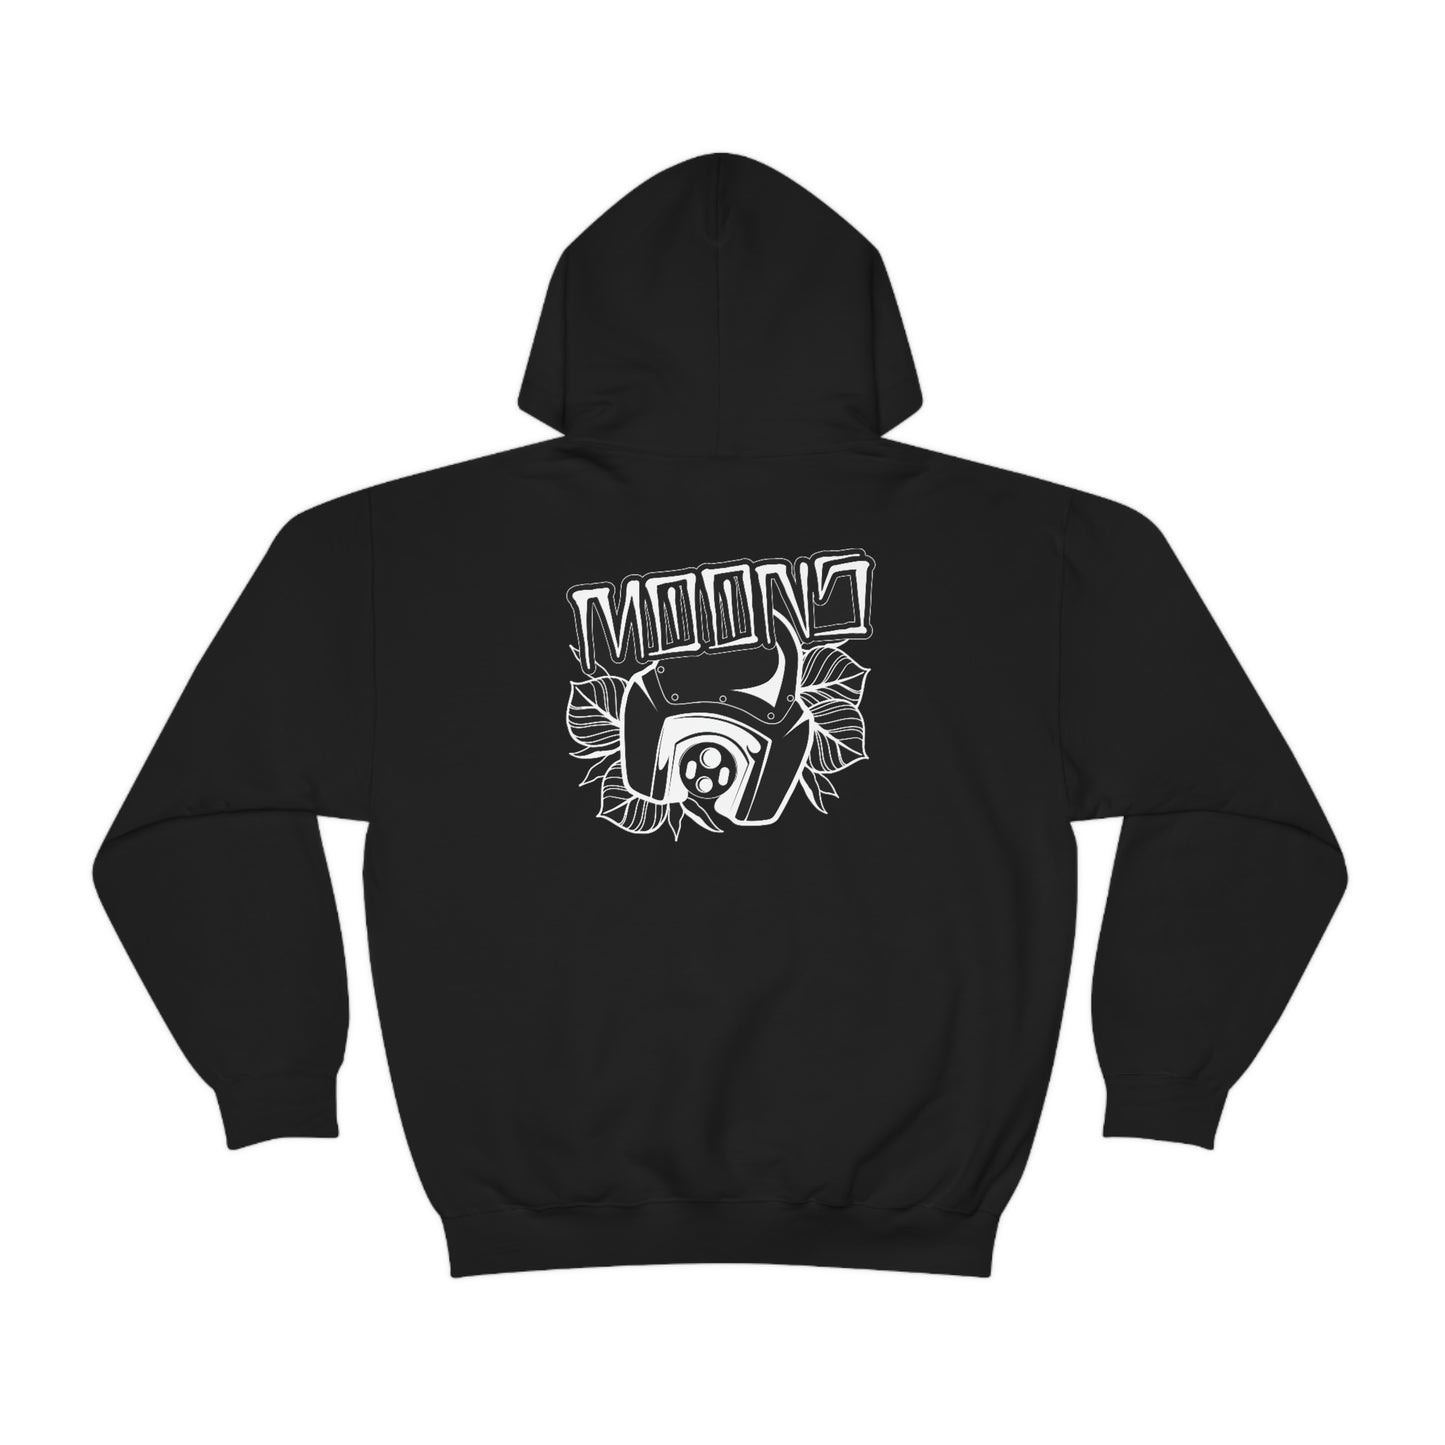 MOONSMC® TSPORT Fairing Hooded Sweatshirt